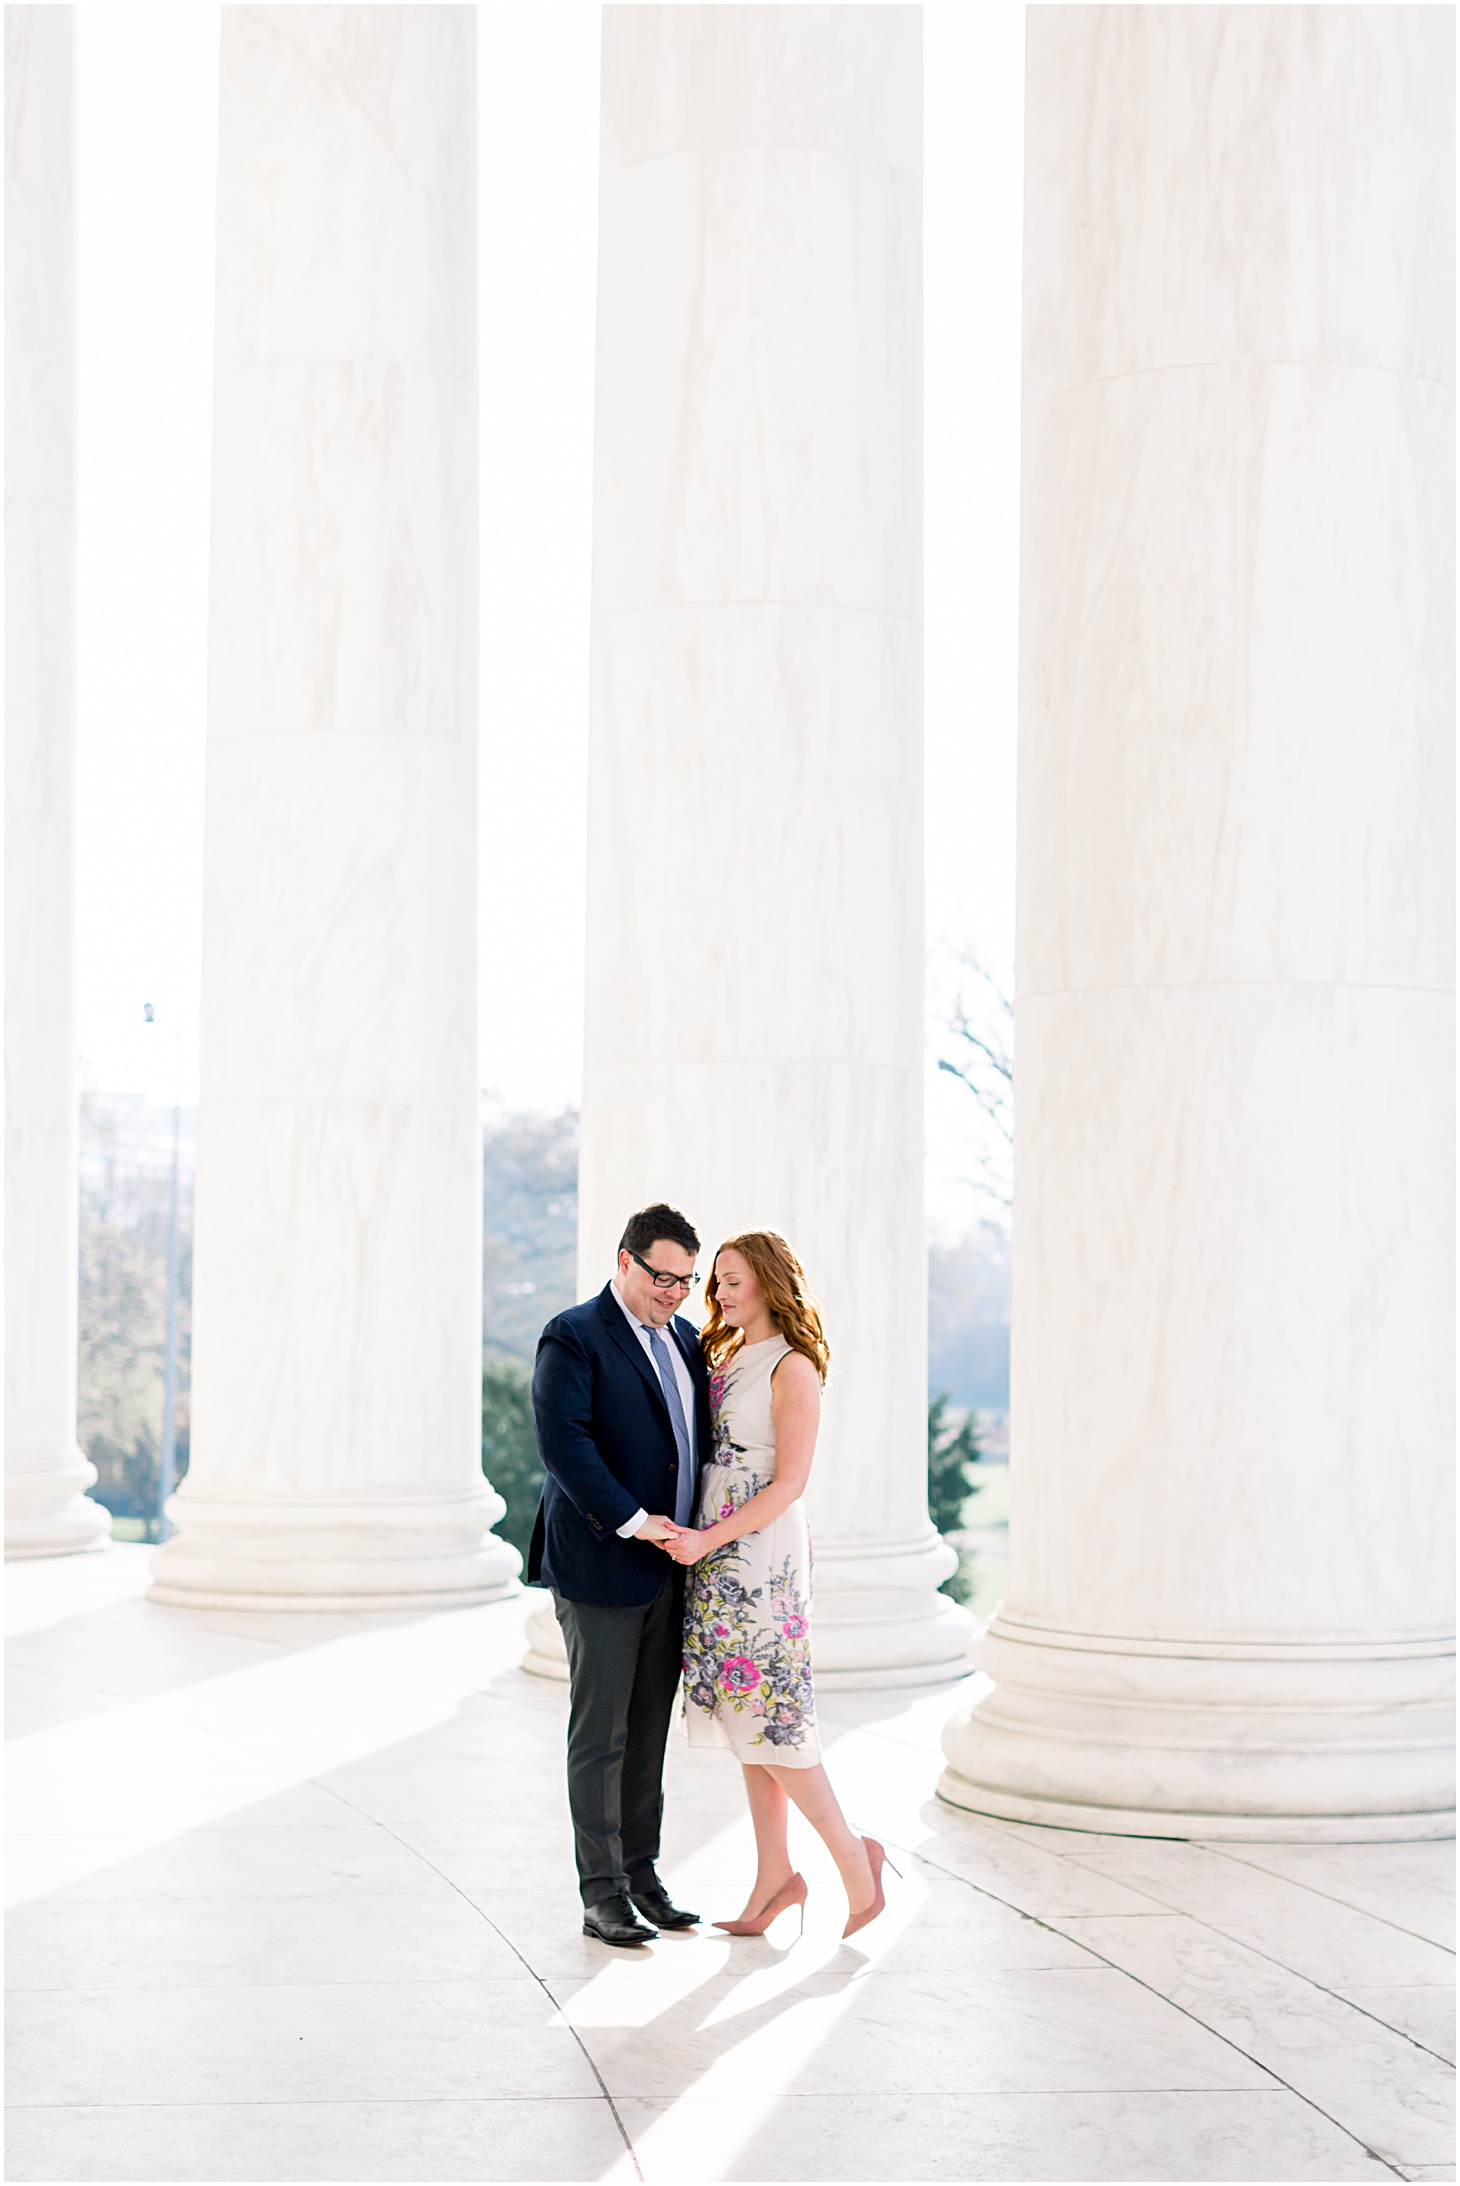 Jefferson Memorial Engagement session at sunrise | Sarah Bradshaw Photography in Washington DC